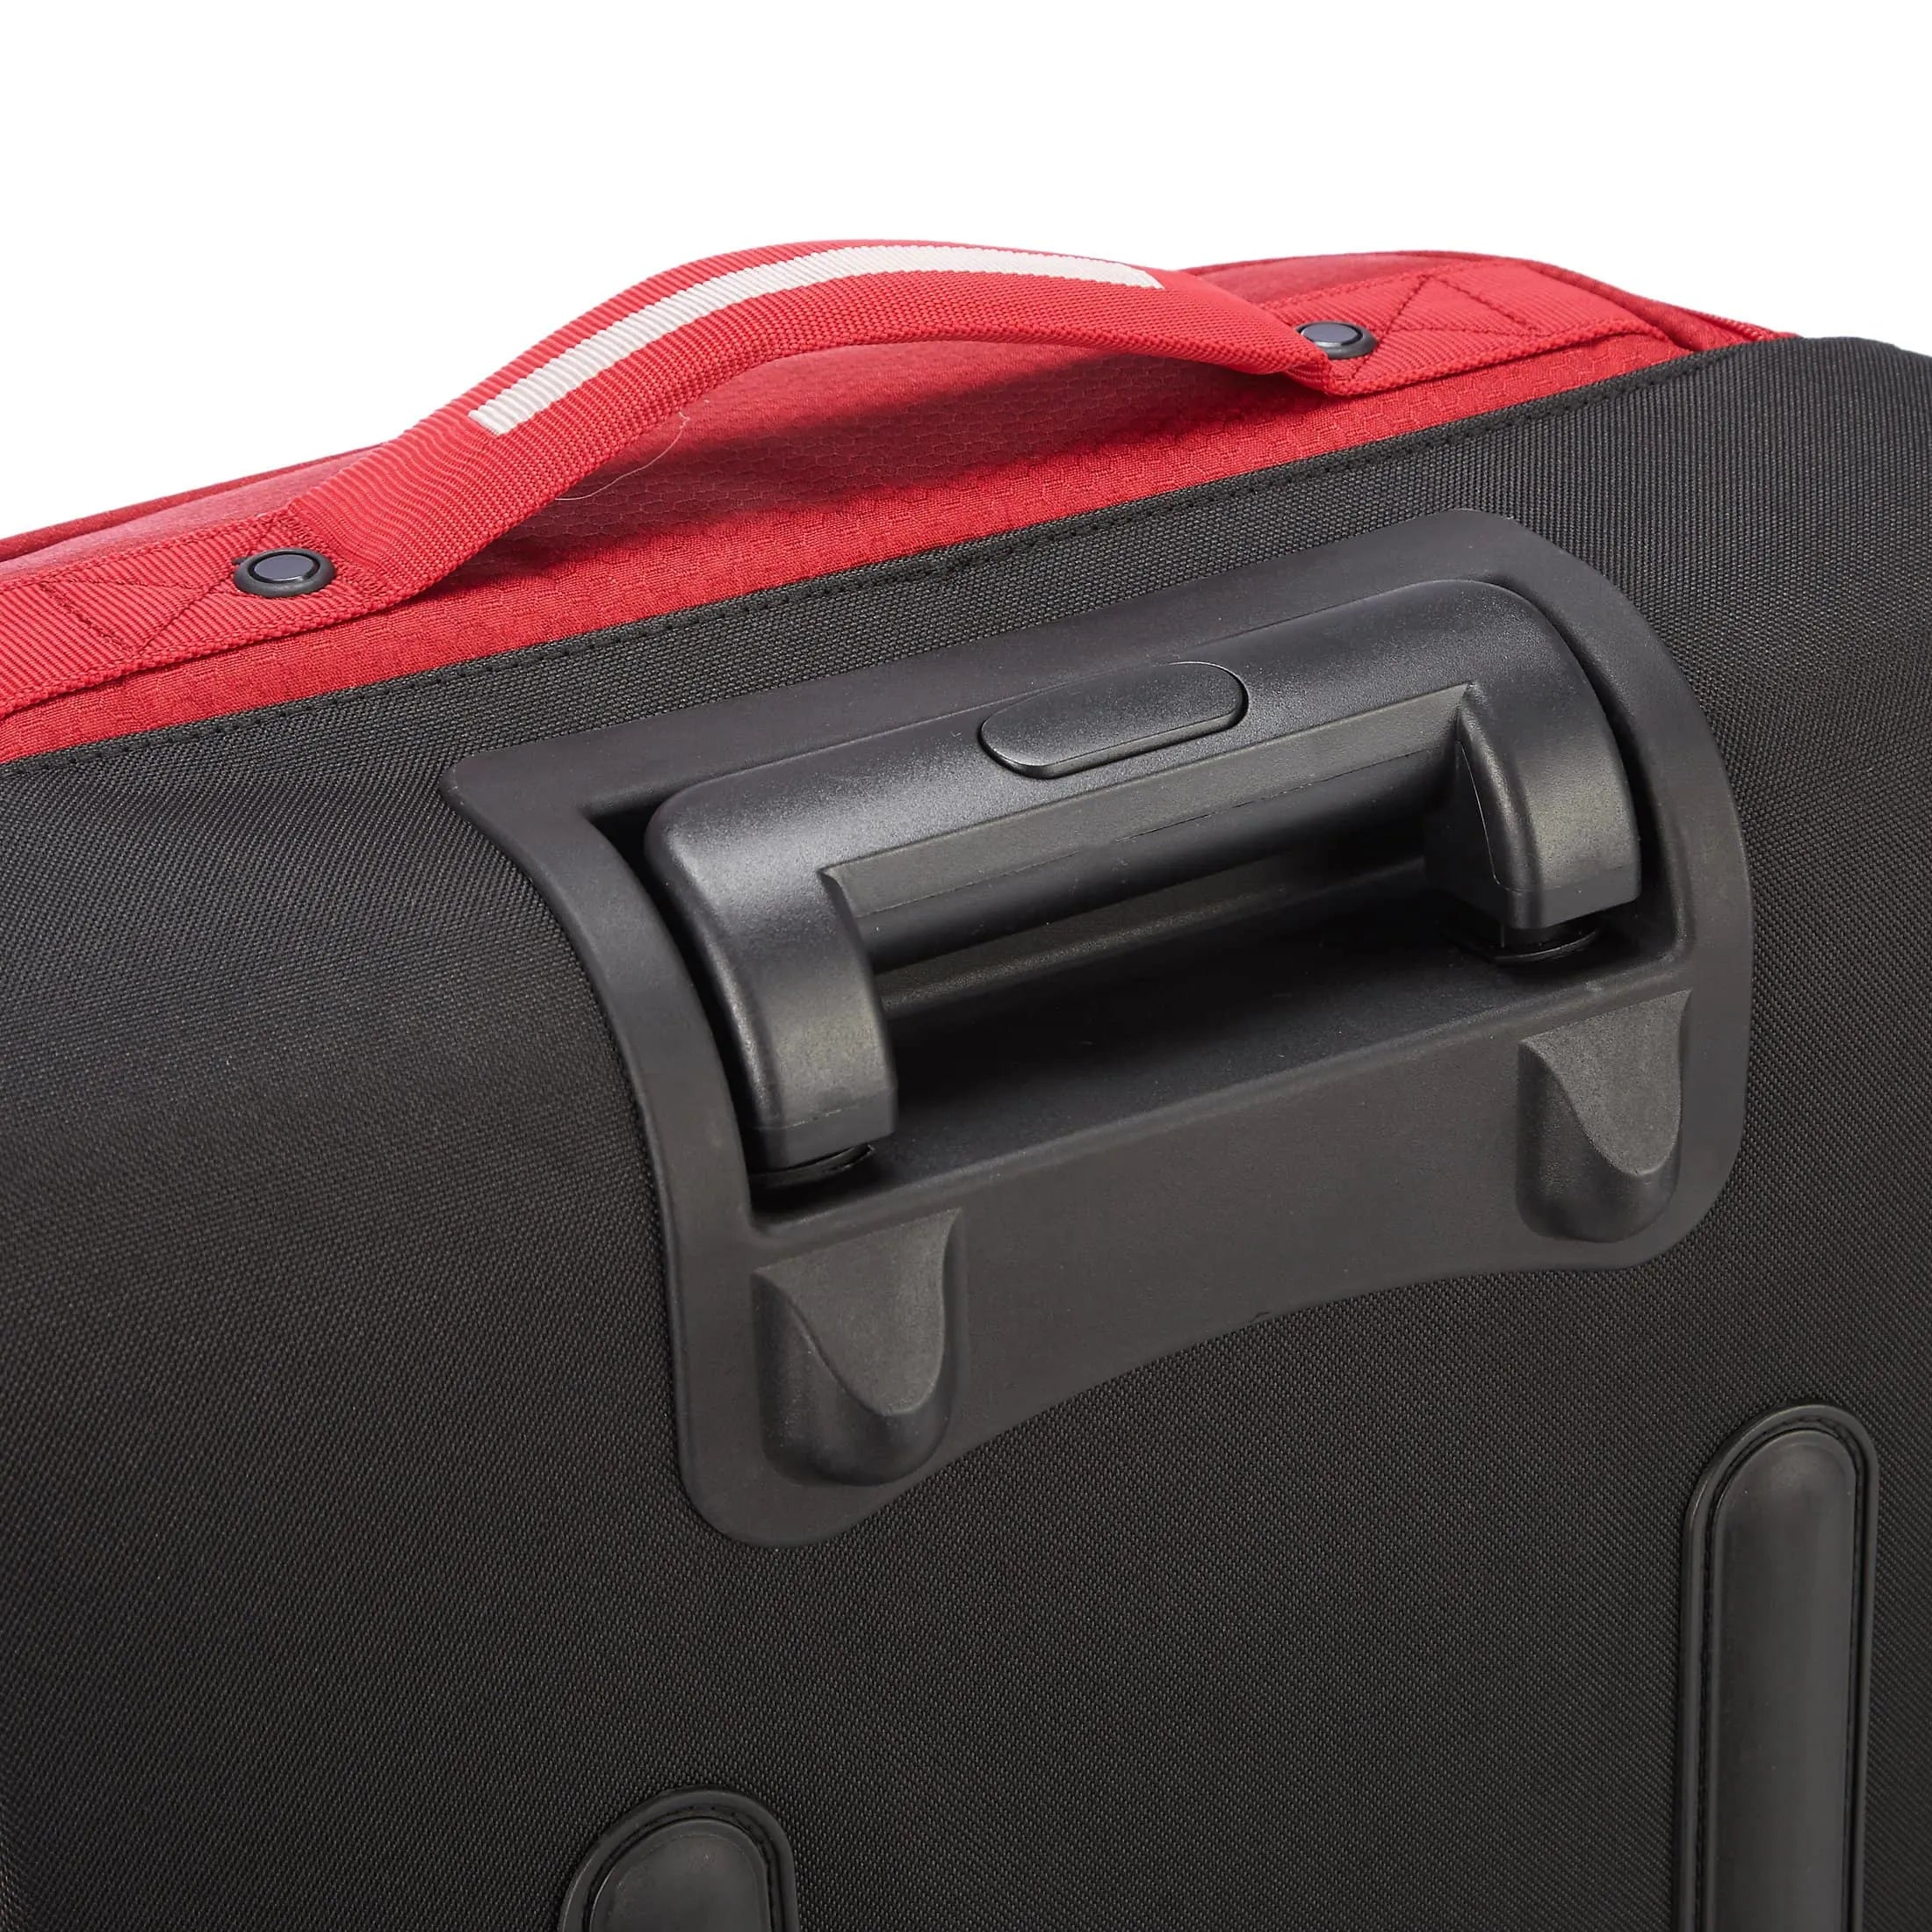 Travelite Kick Off Trolley Travel Bag S 55 cm - Red